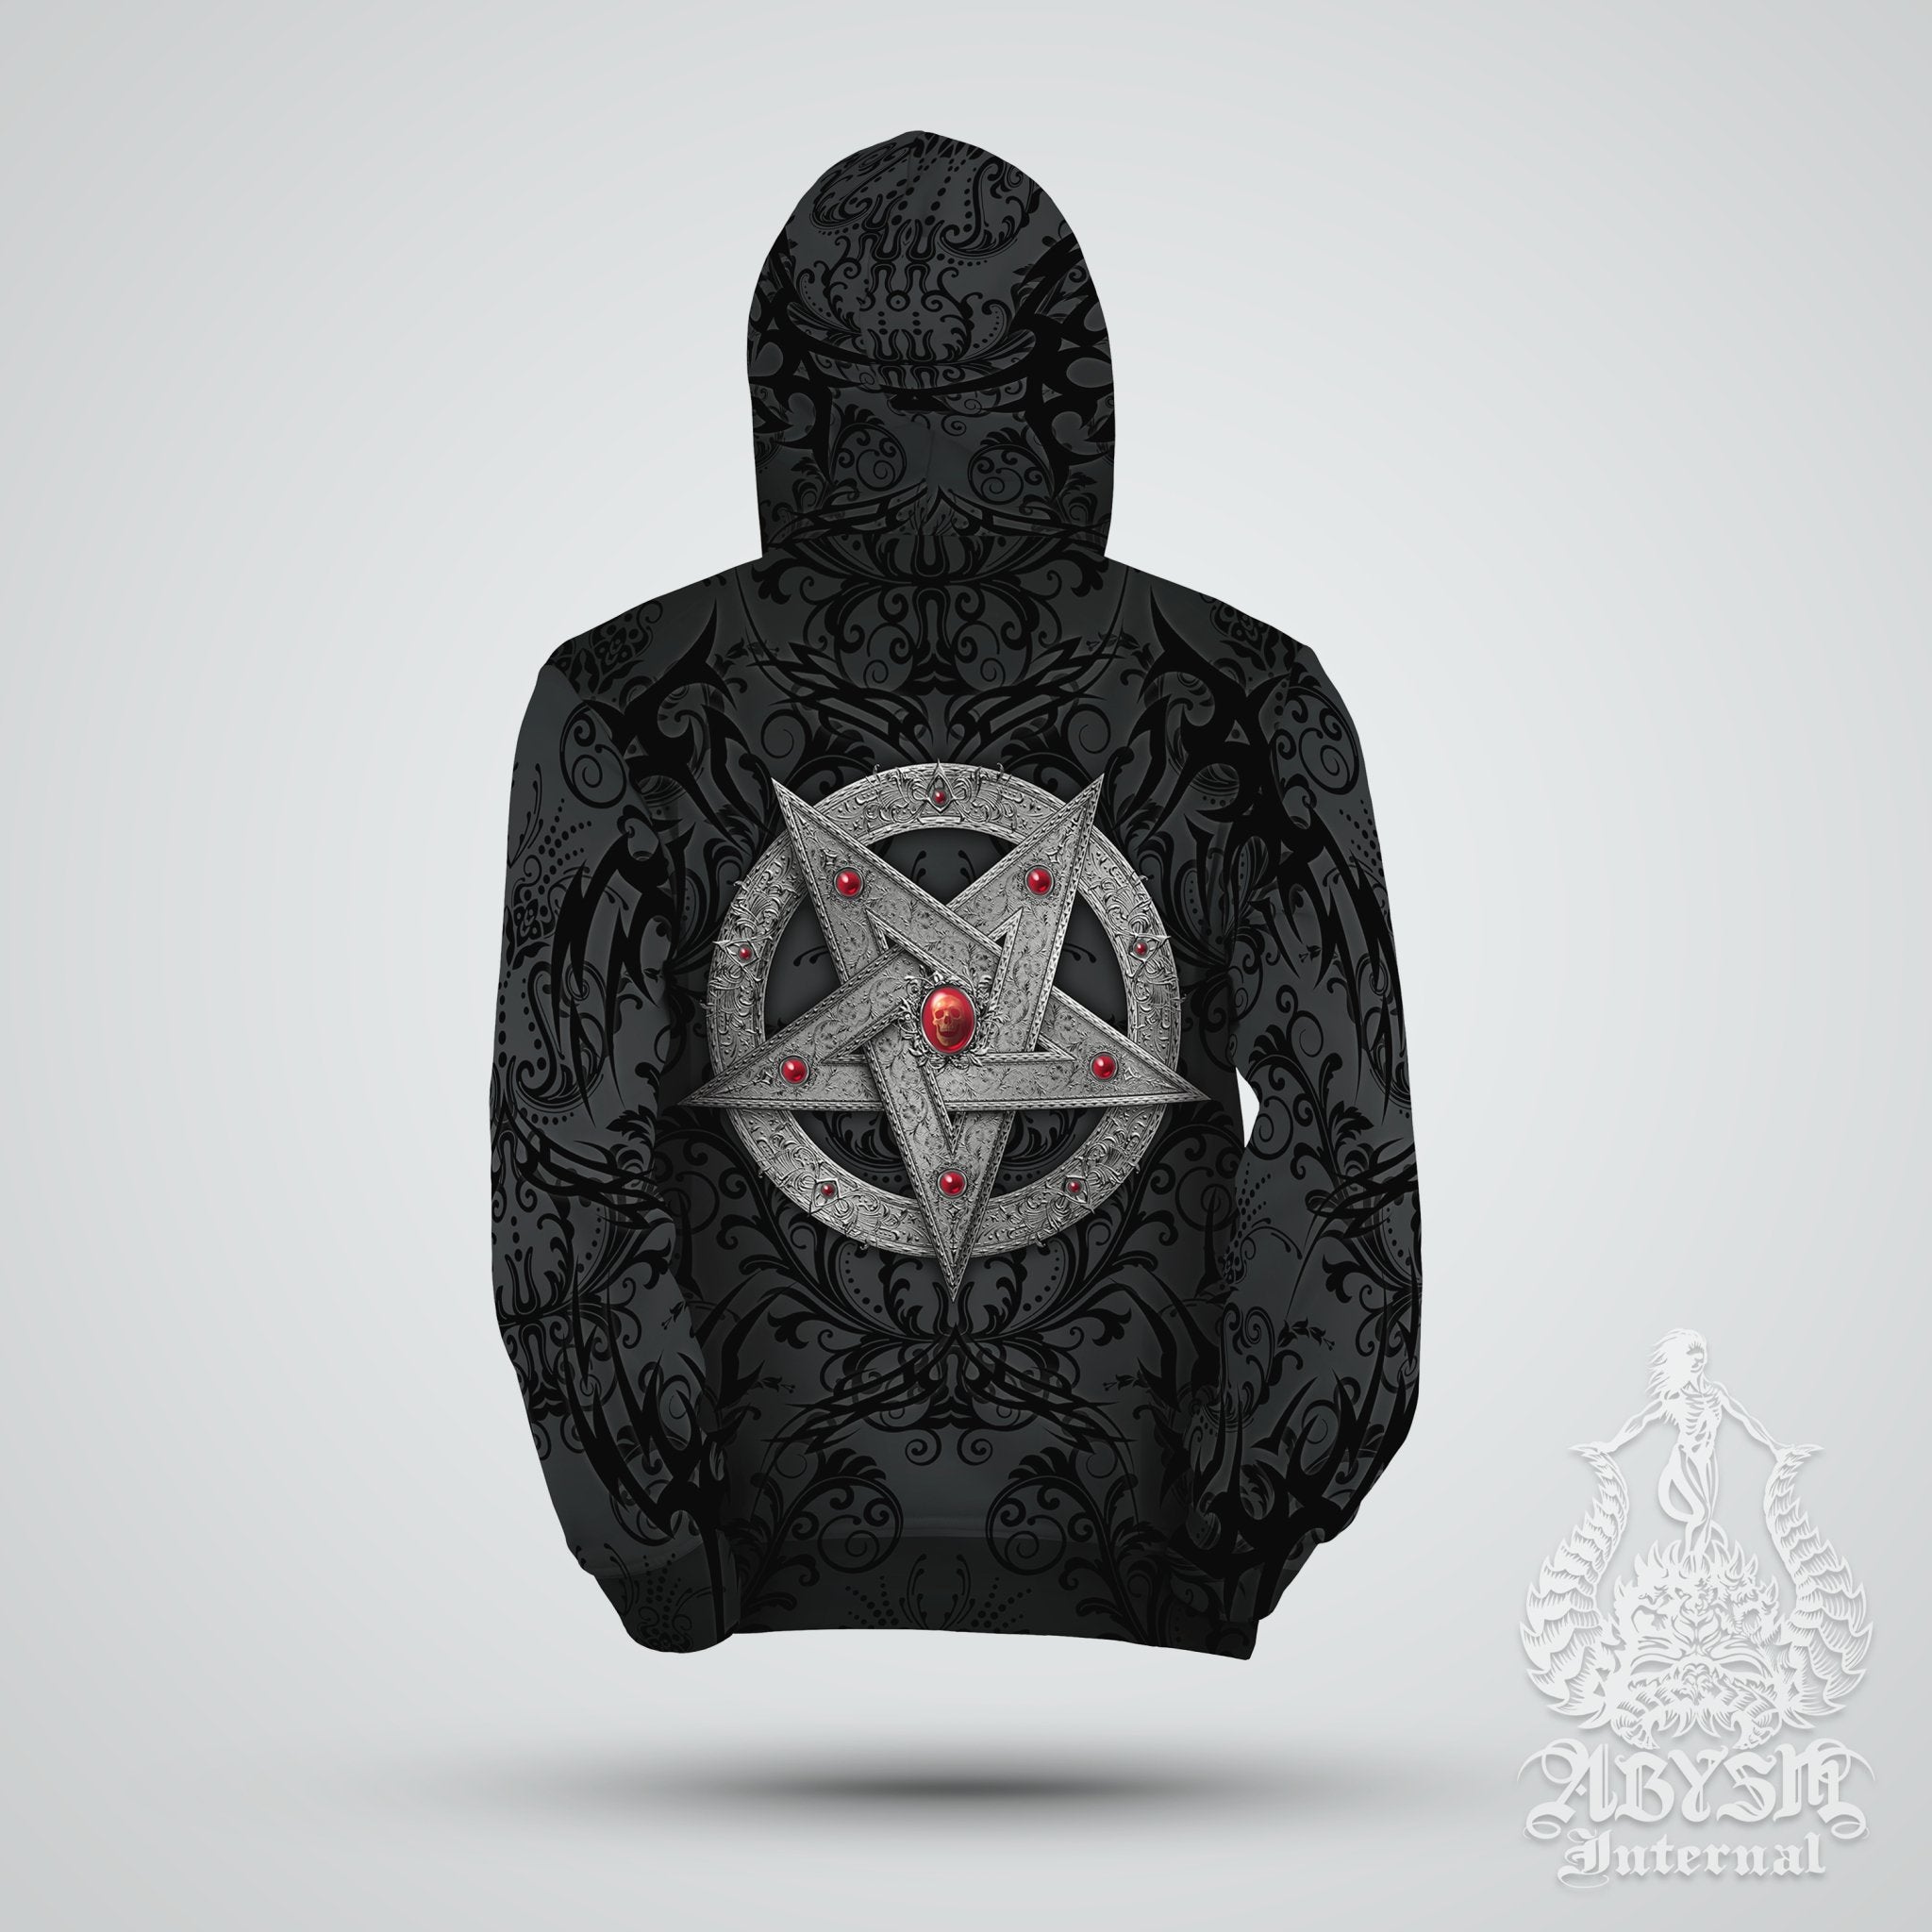 Silver Pentagram Sweater, Black Metal Streetwear, Gothic Hoodie, Satanic Goth, Alternative Clothing, Unisex - Red or Black, 2 Colors - Abysm Internal